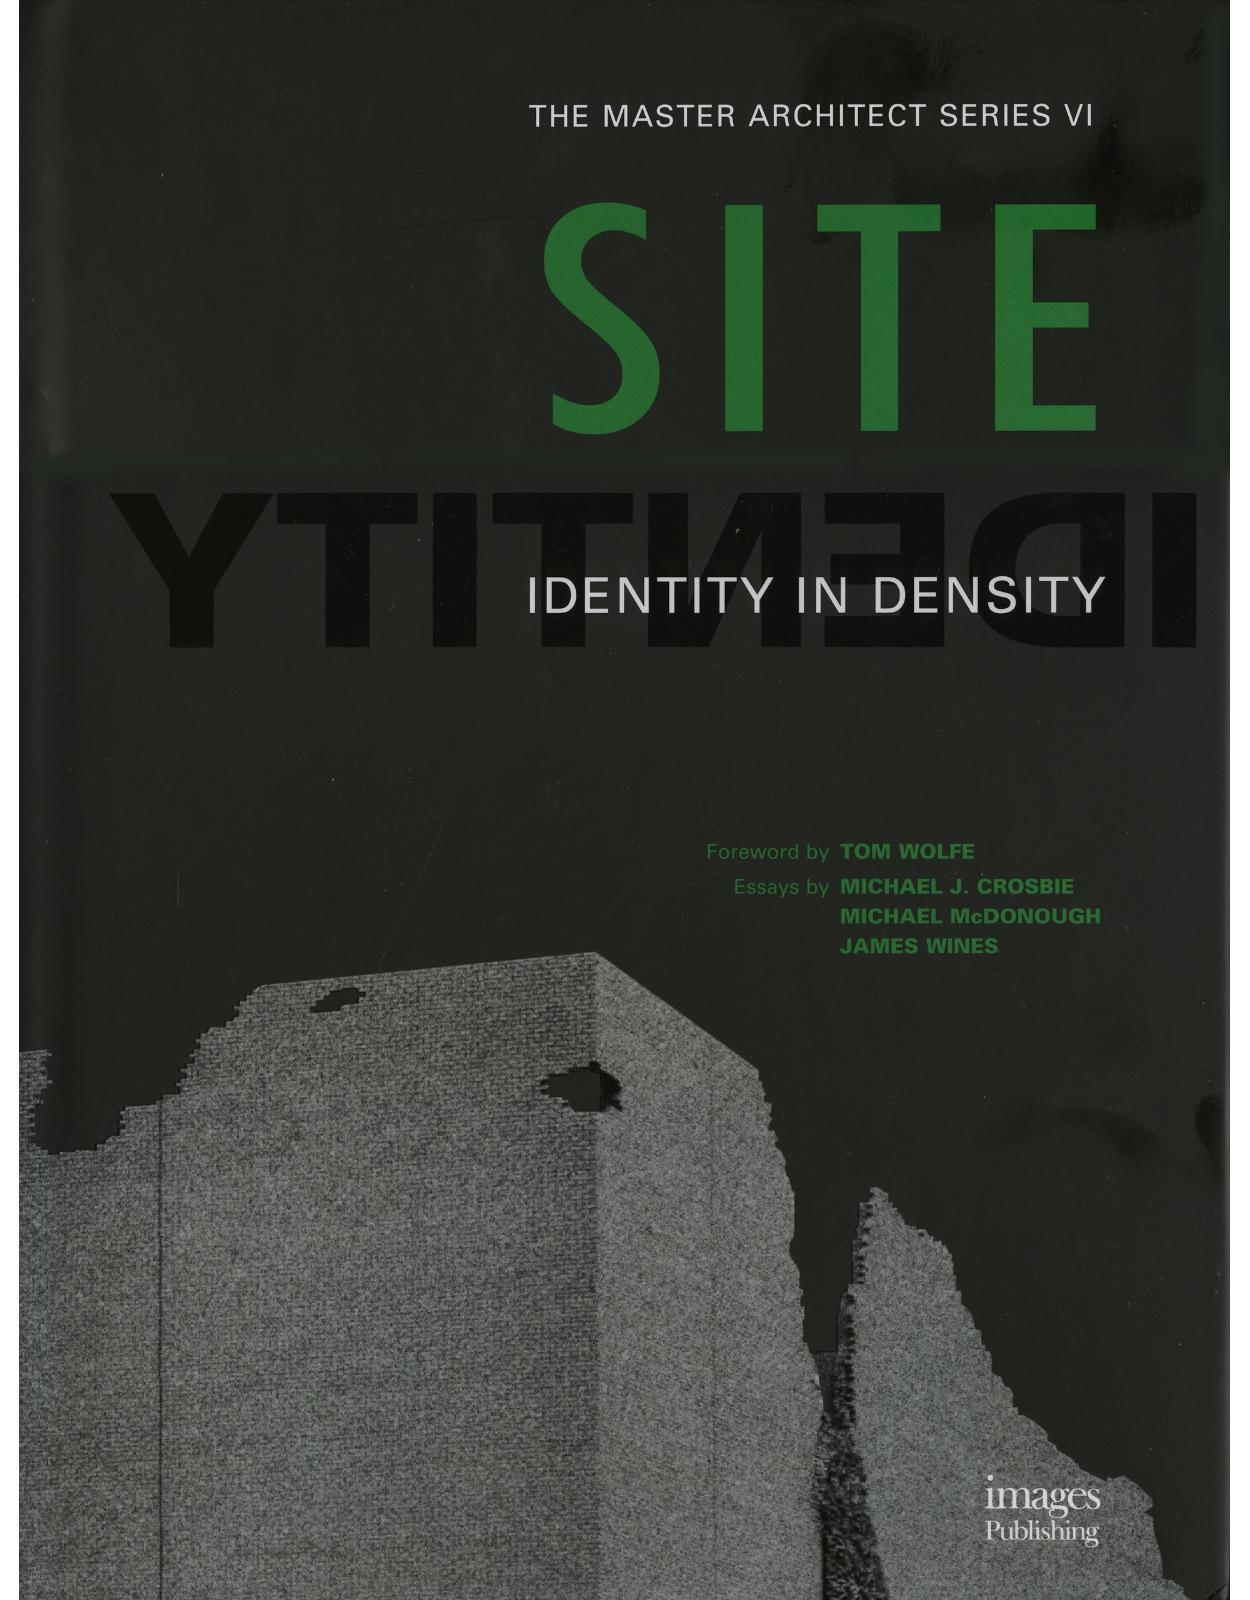 SITE: Identity in Density (Master Architect Series VI)